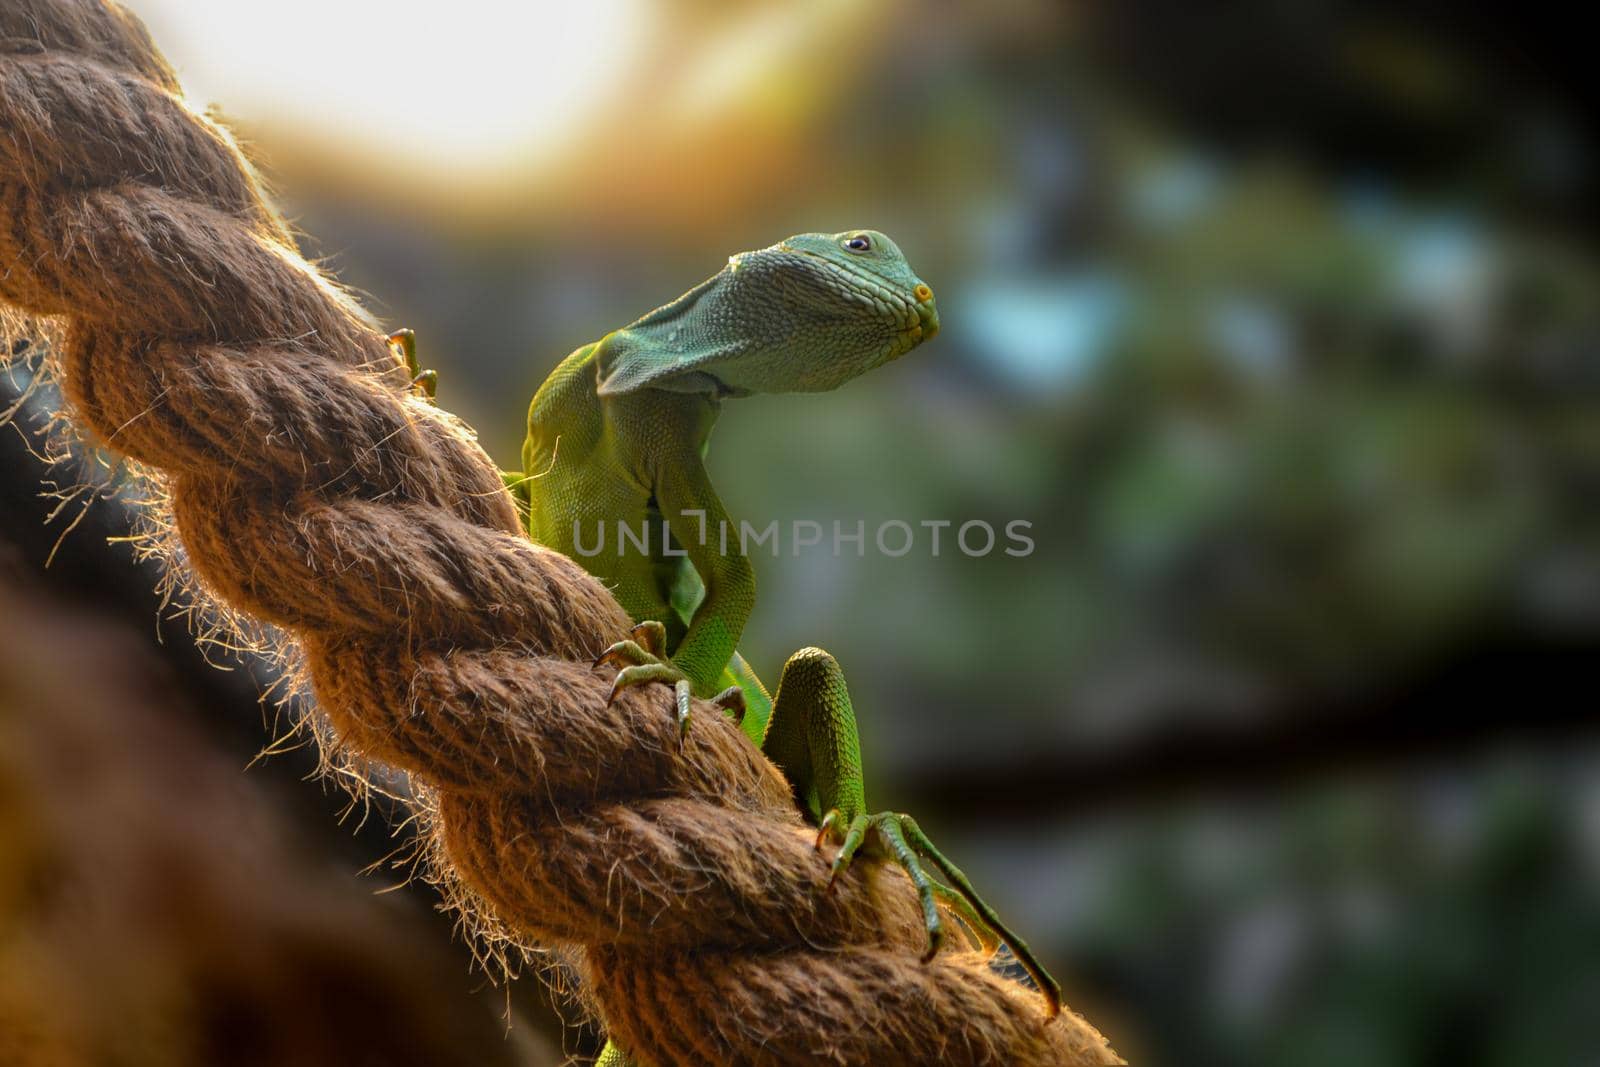 Green skin lizard looking Chinese water dragon. High quality photo